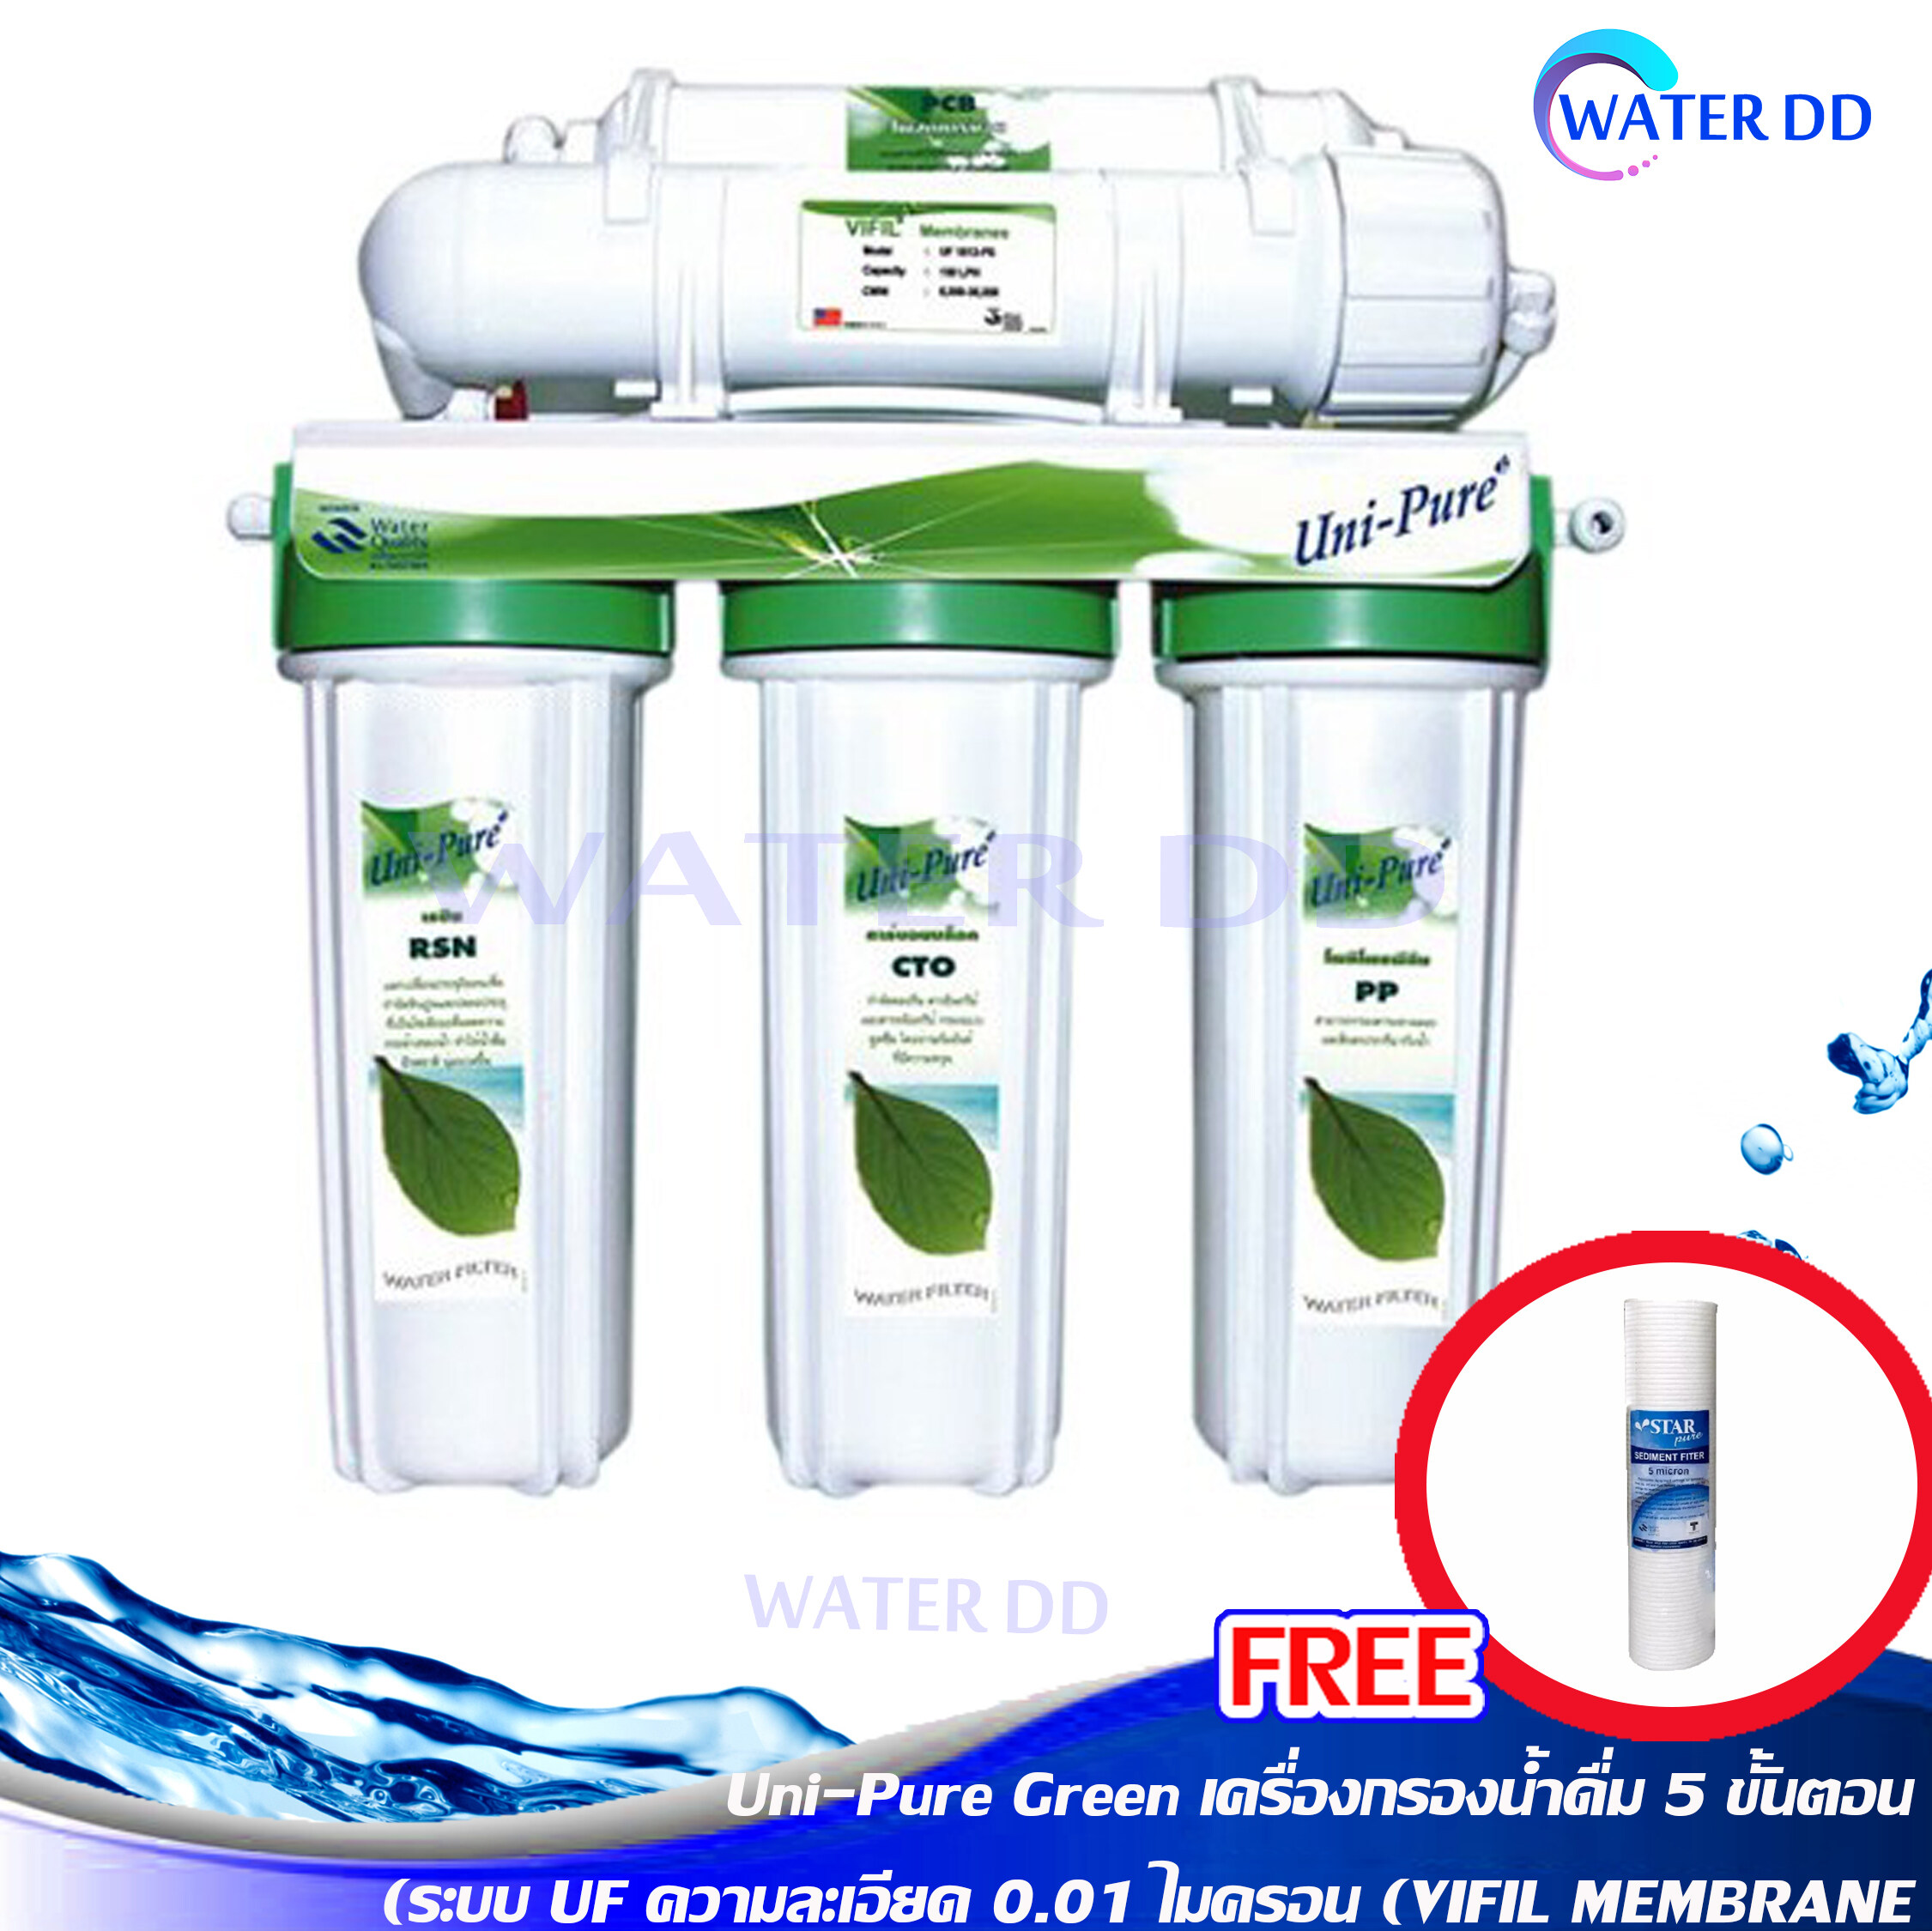 Uni-Pure Green เครื่องกรองน้ำดื่ม 5 ขั้นตอน ระบบ UF ความละเอียด 0.01 ไมครอน (VIFIL MEMBRANE) แถมฟรี!! ไส้กรองน้ำ PP 5 ไมครอน 1 ชิ้น !!